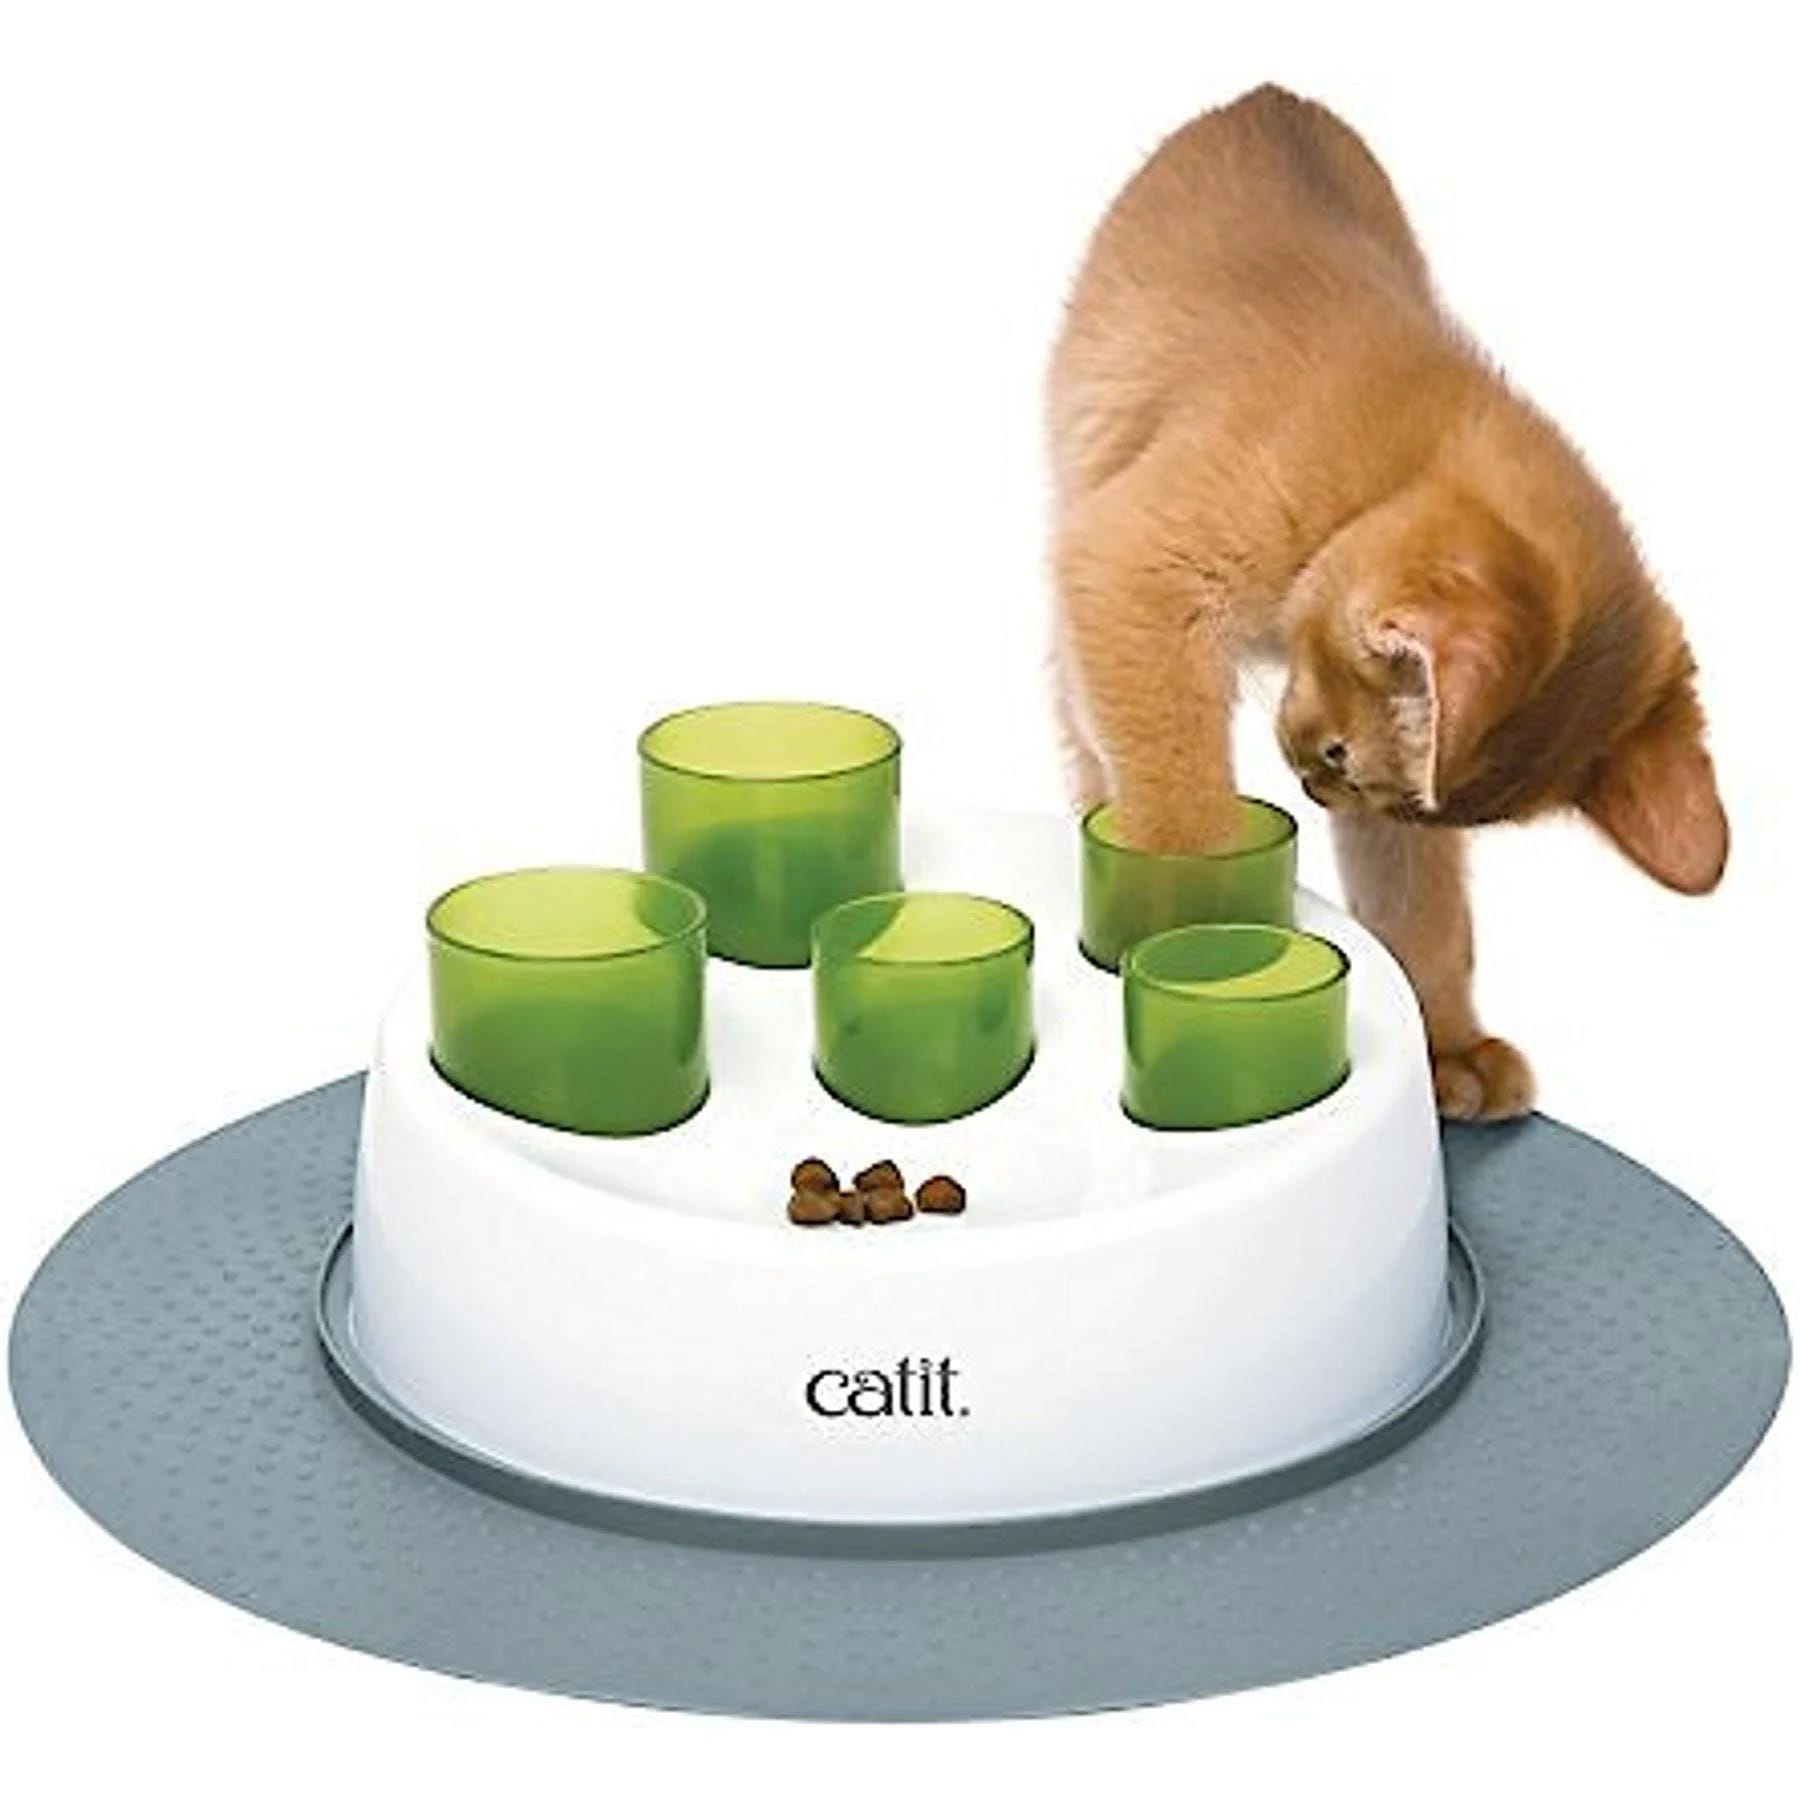 Stimulating and Fun for Cats: Catit Senses 2.0 Digger | Image